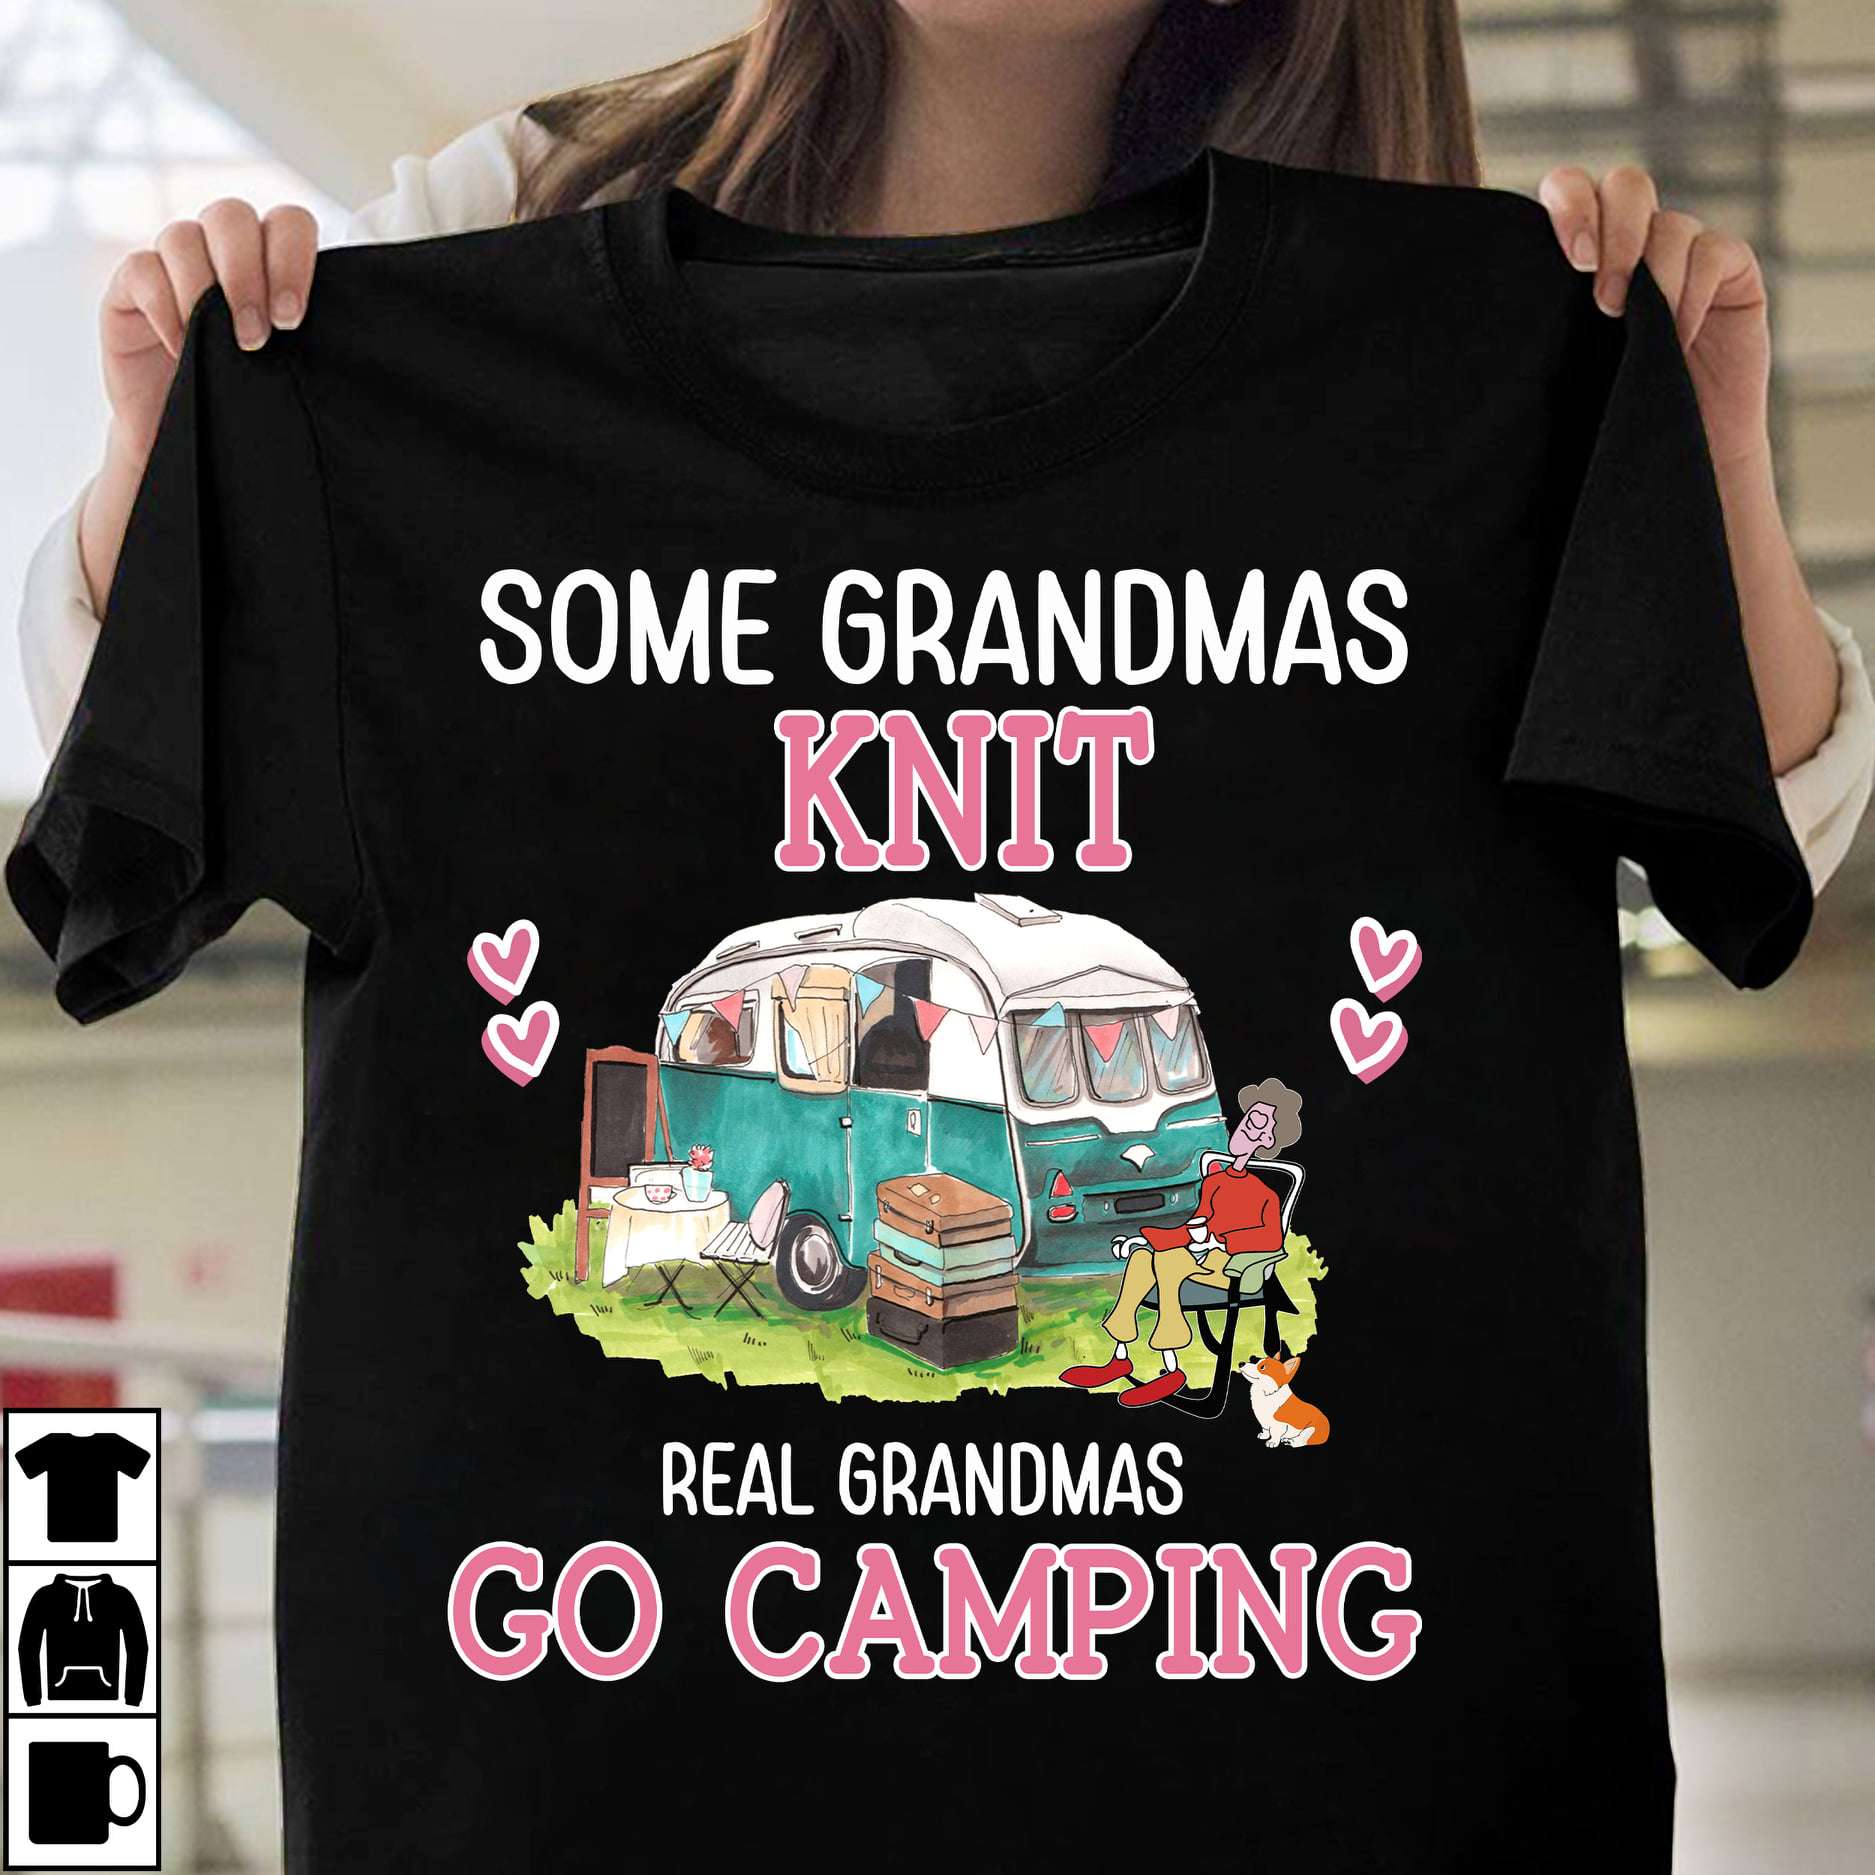 Some grandmas knit real grandmas go camping - Grandma camper for life, camping with dog